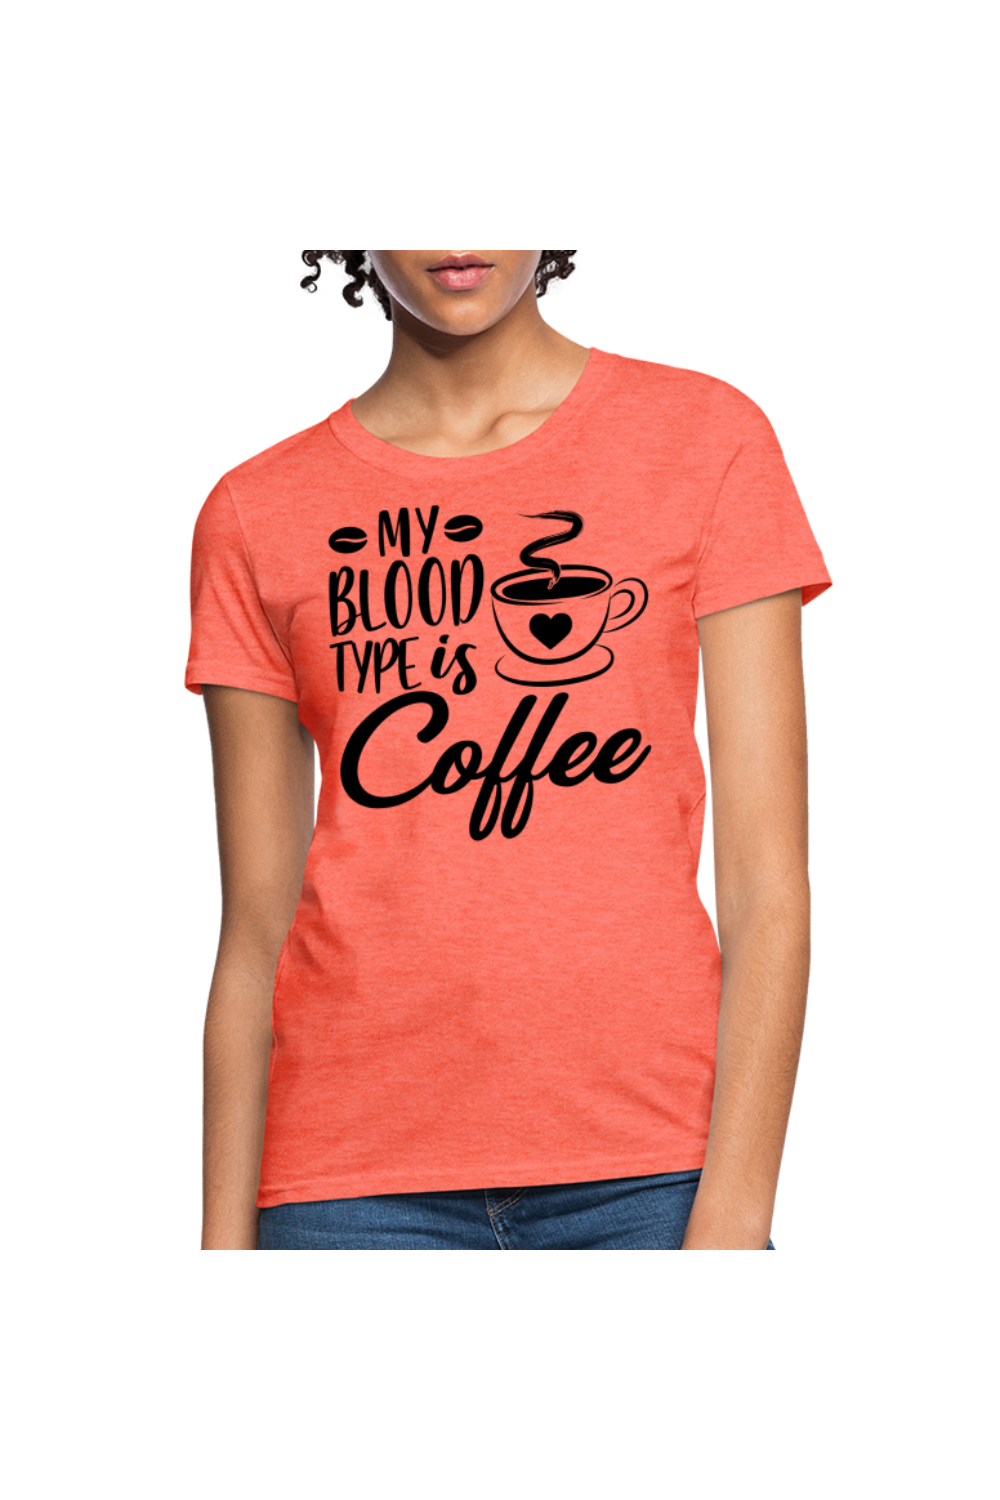 My Blood Type Is Coffee Women's Nurse T-Shirt - heather coral